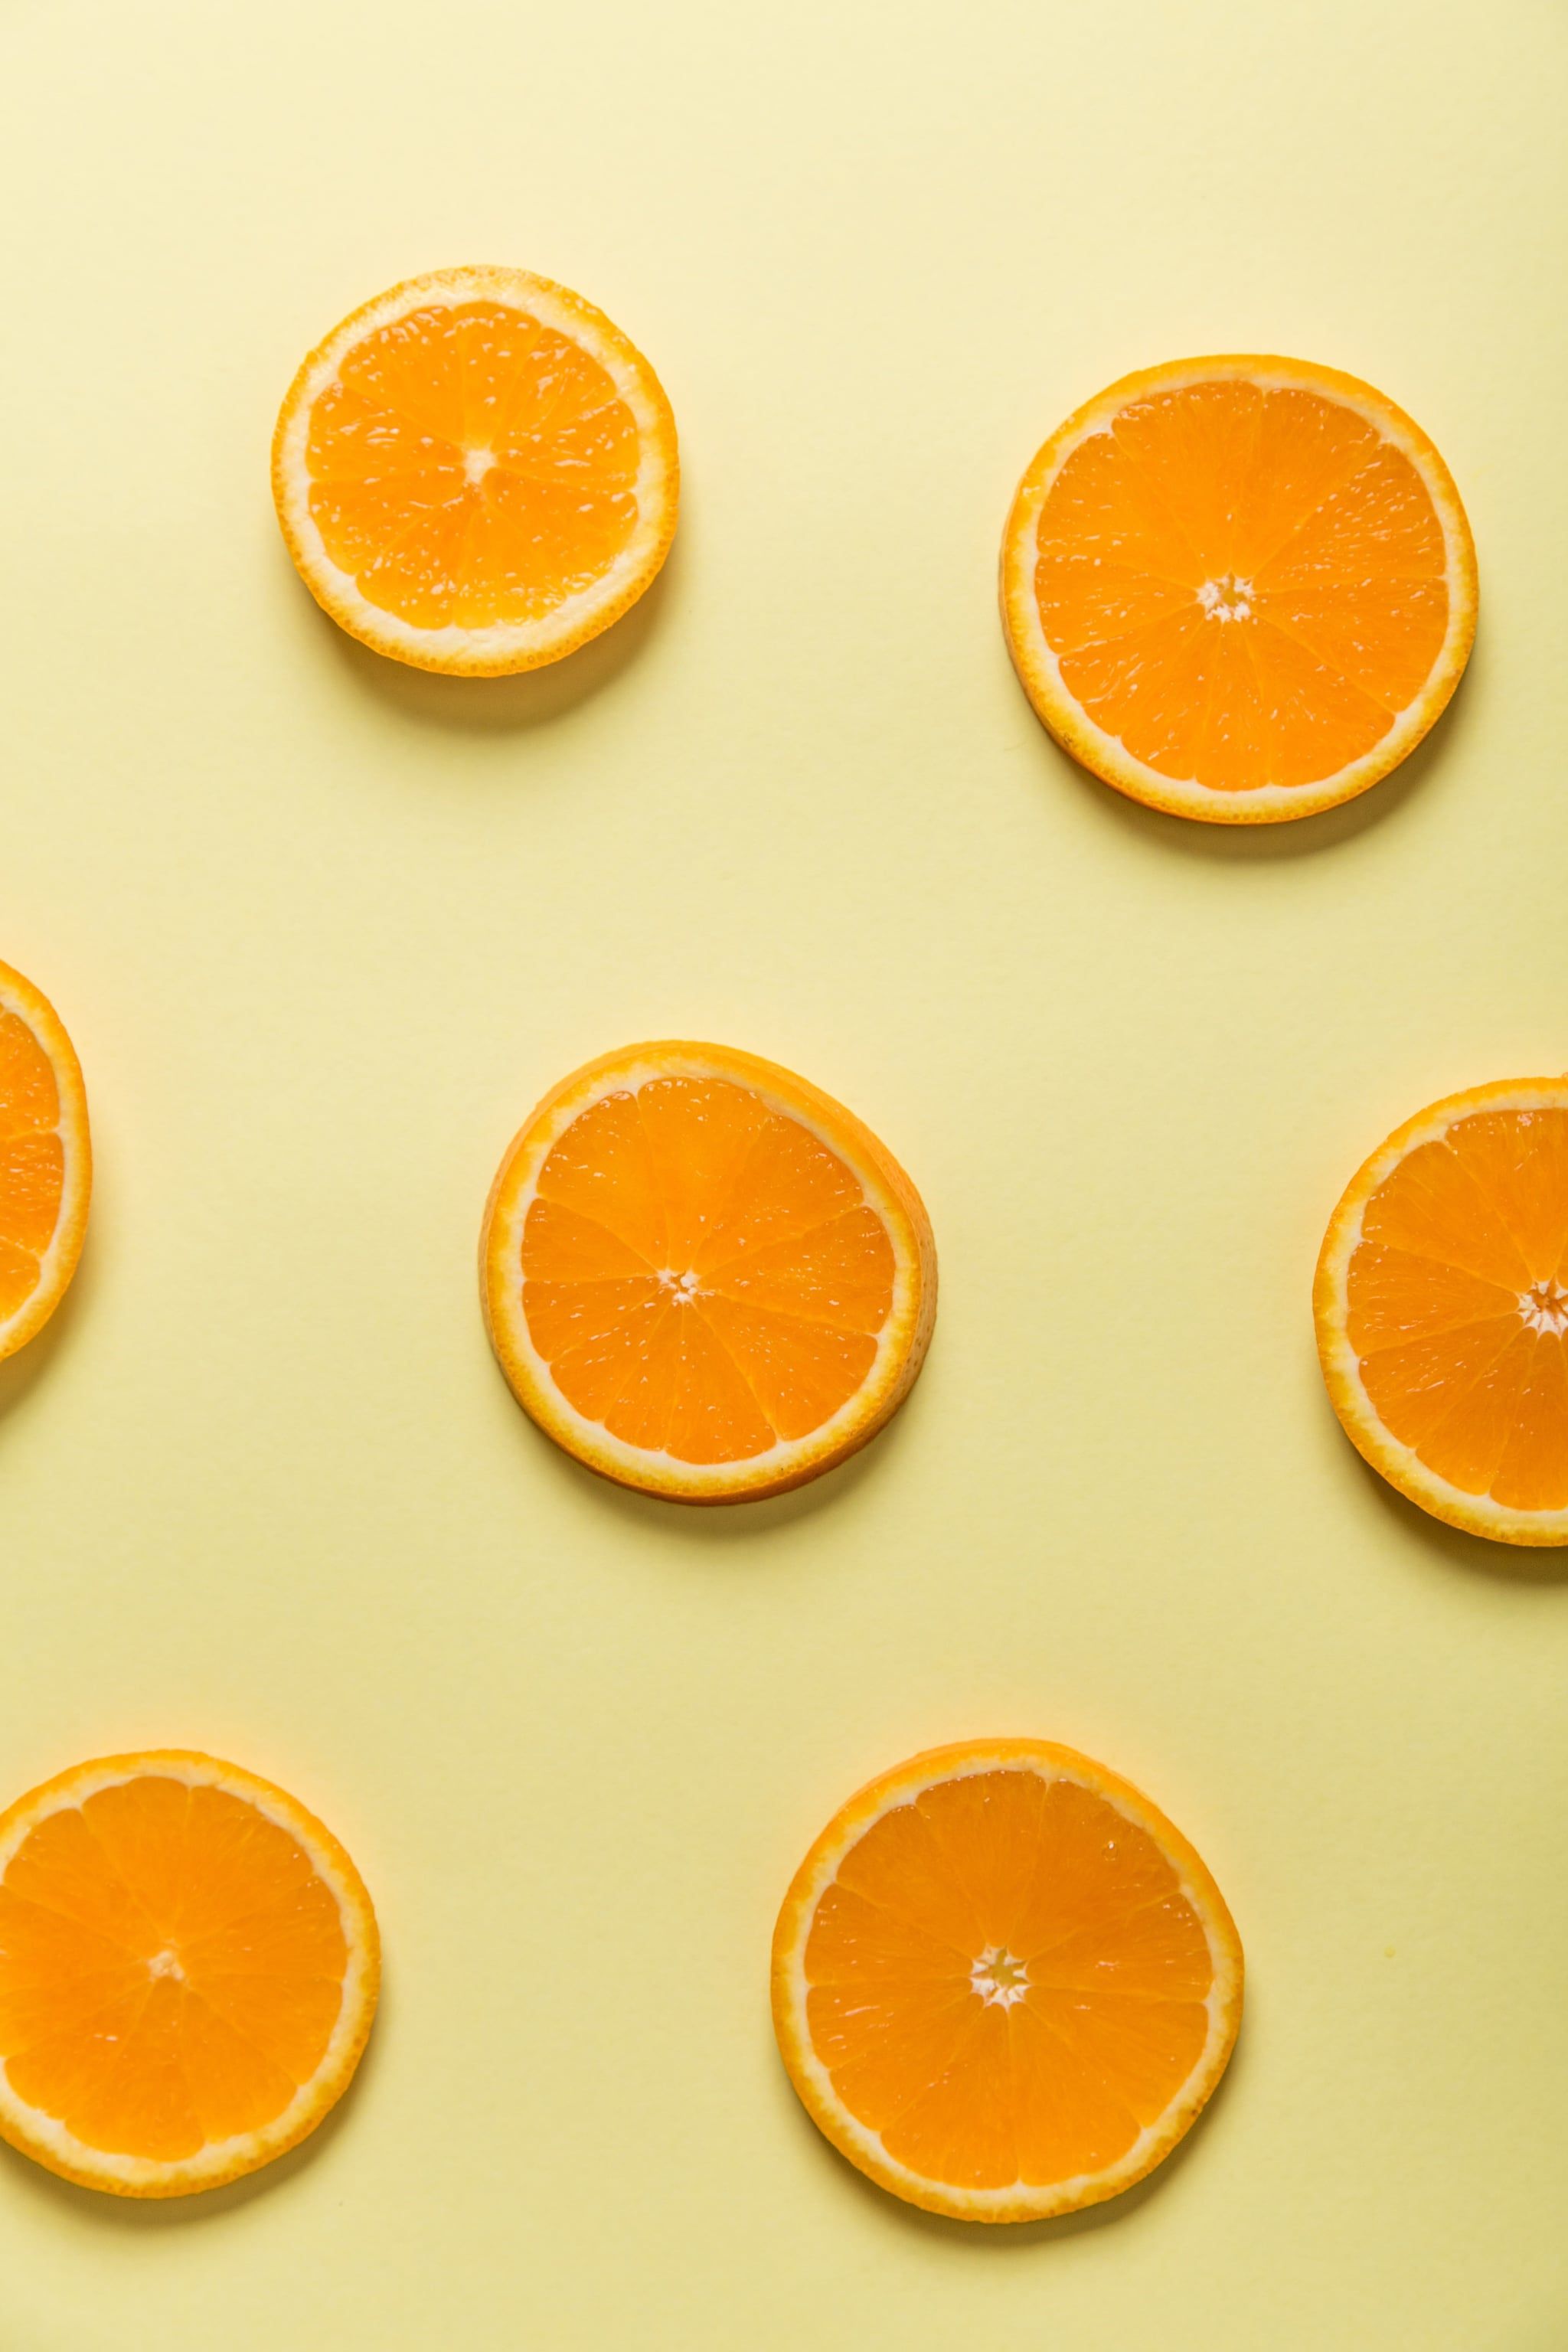 Orange Hintergrundbild 2048x3072. Orange Slice iPhone Wallpaper. The Best Wallpaper Ideas That'll Make Your Phone Look Aesthetically Pleasing